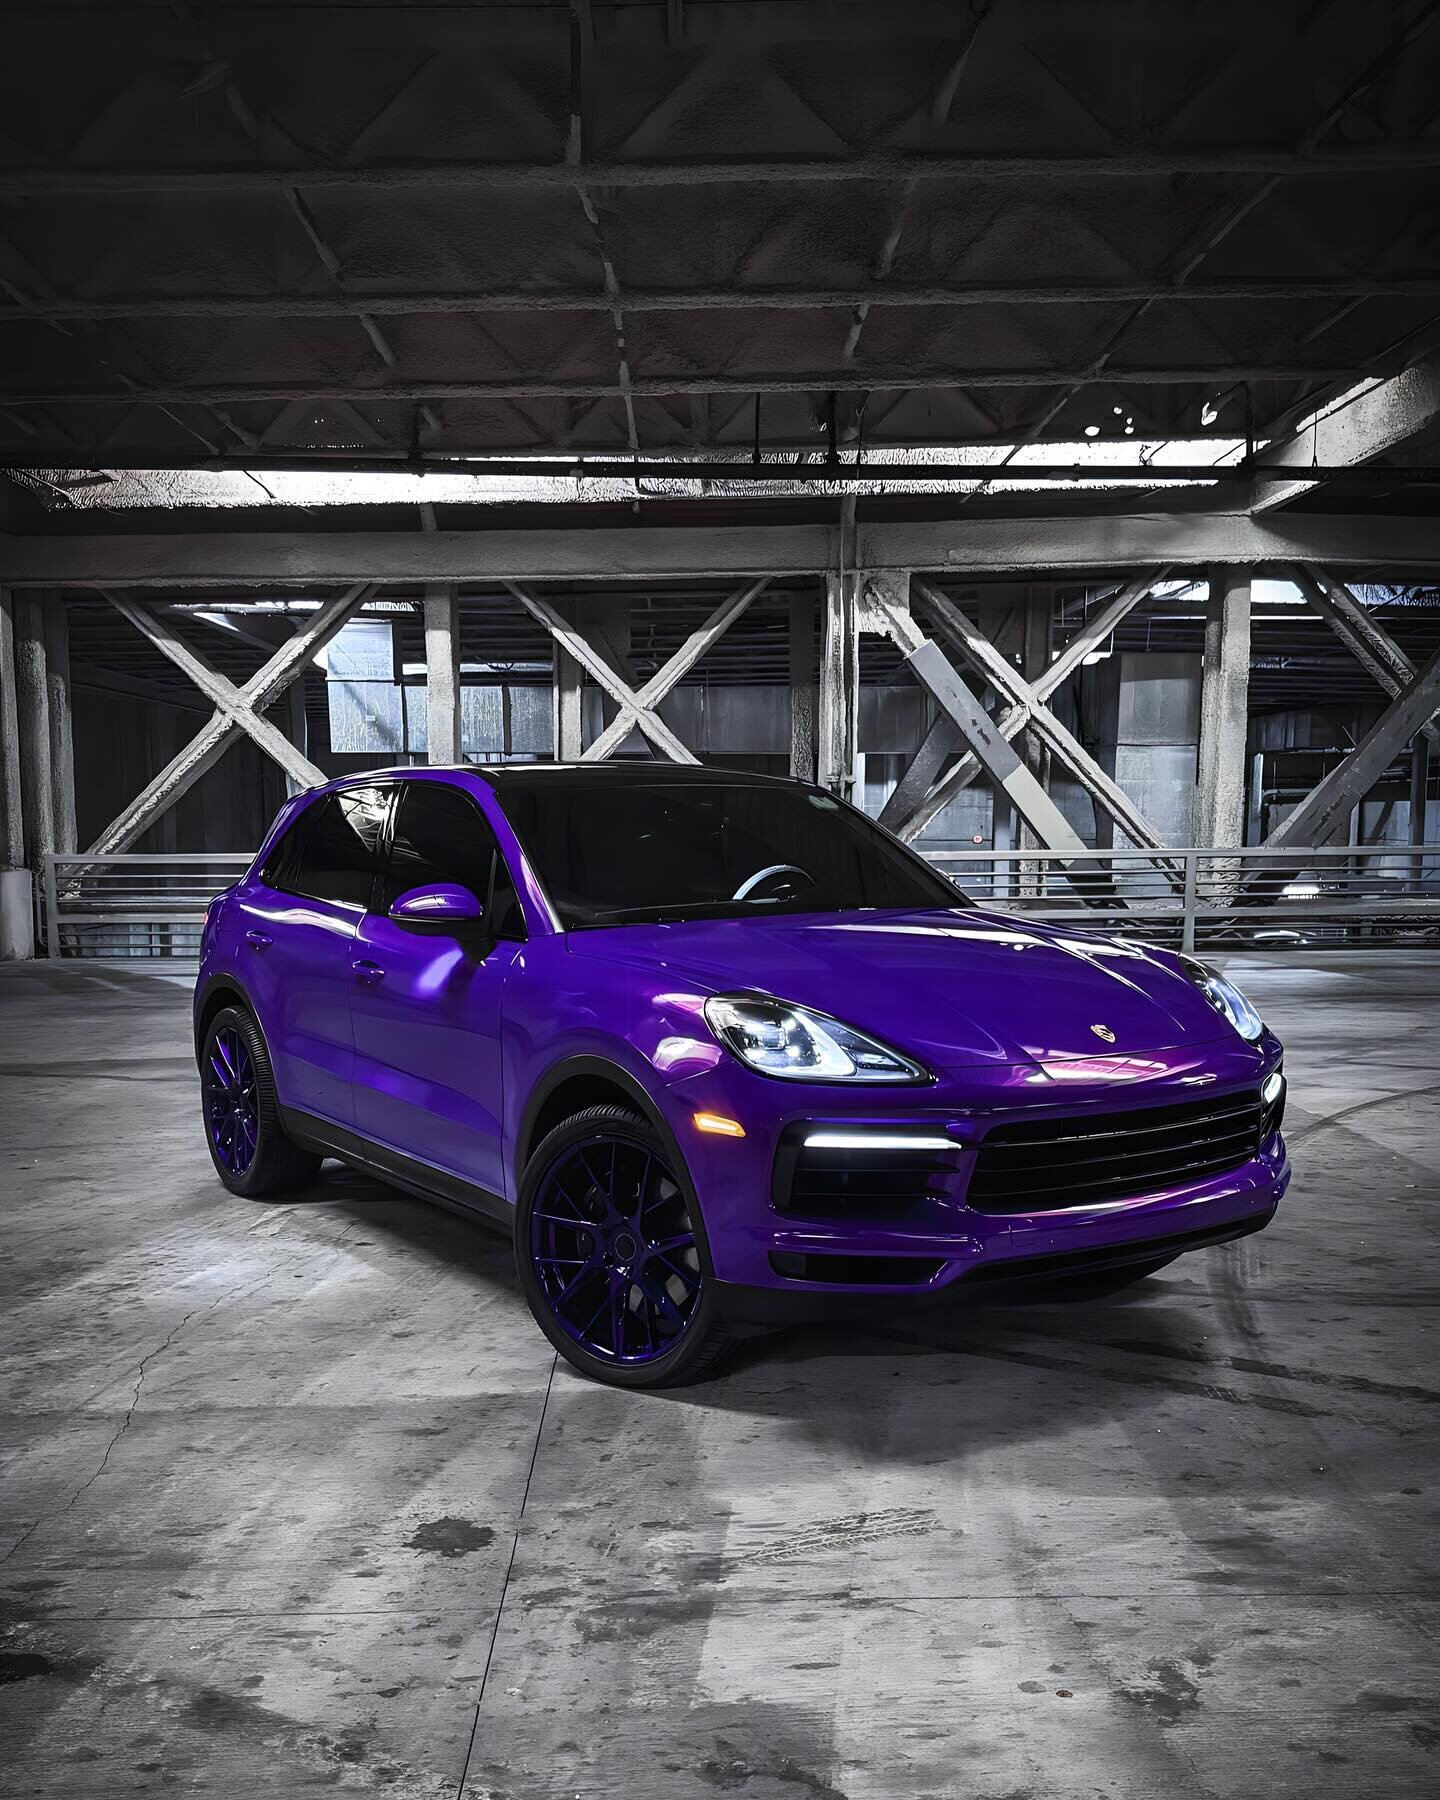 Porsche Cayenne wrapped in @3mfilms Gloss Plum Explosion w/ Candy Purple F18 @bdwheels to match!
#purpleporsche #plumexplosion #cayenne #mobileservice #mobilewraps #thewrapdistrict #thewrapdistrictla #vinylwrap #wrapped #paintisdead